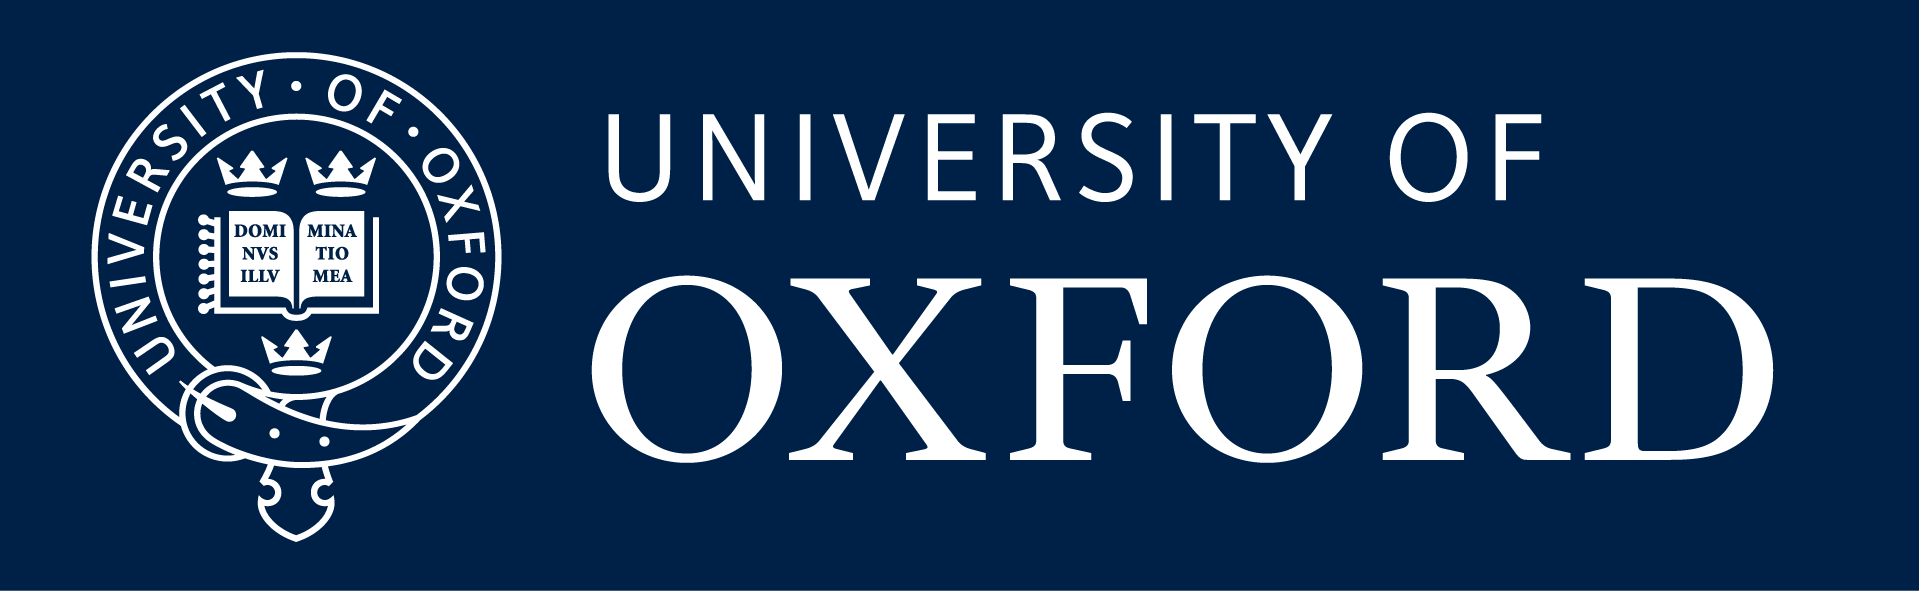 logo of university of oxford